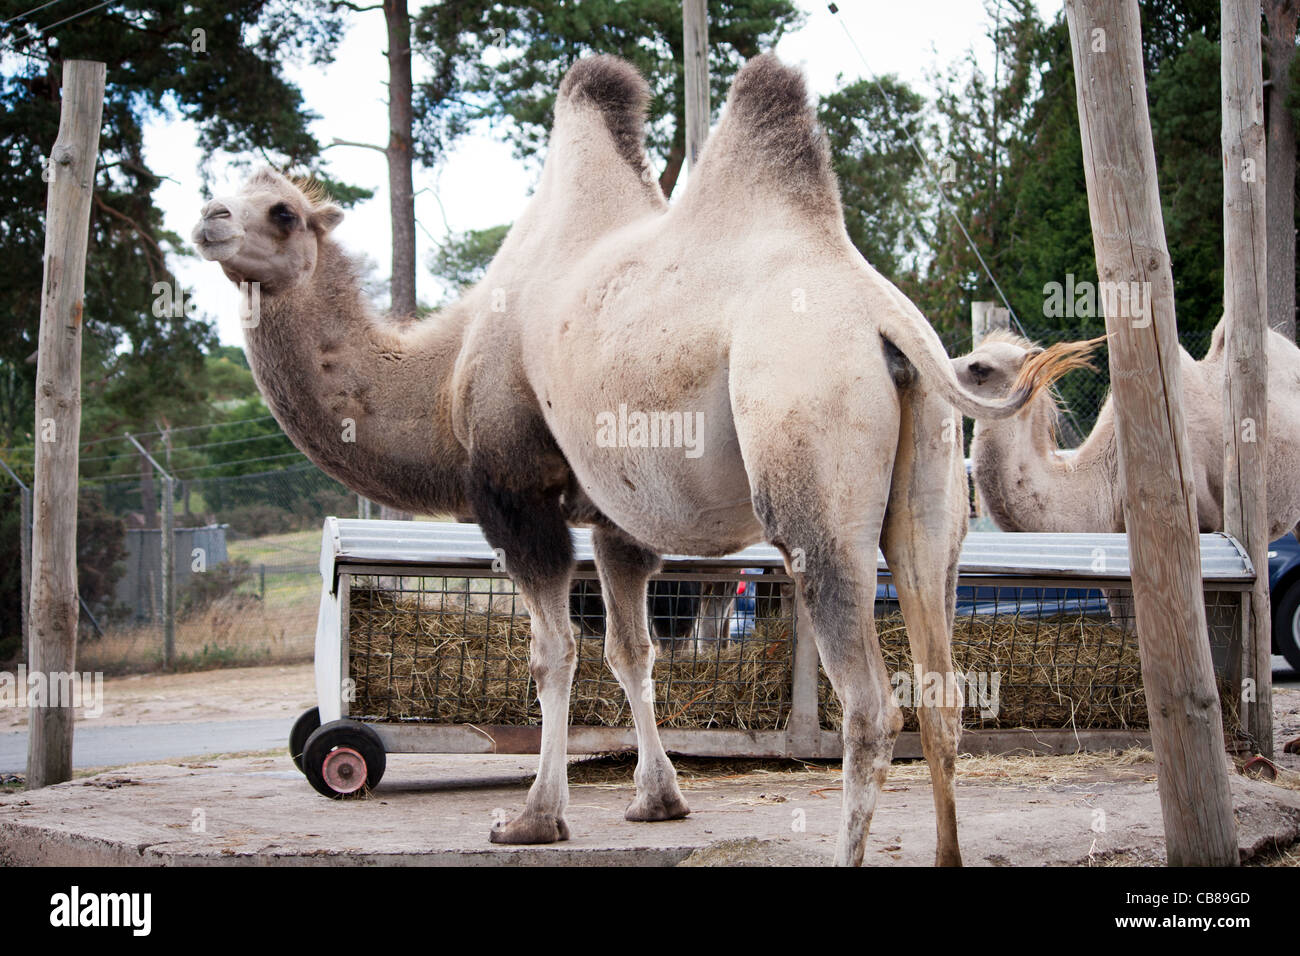 A camel zoo animal walking away freely at a safari park Stock Photo - Alamy